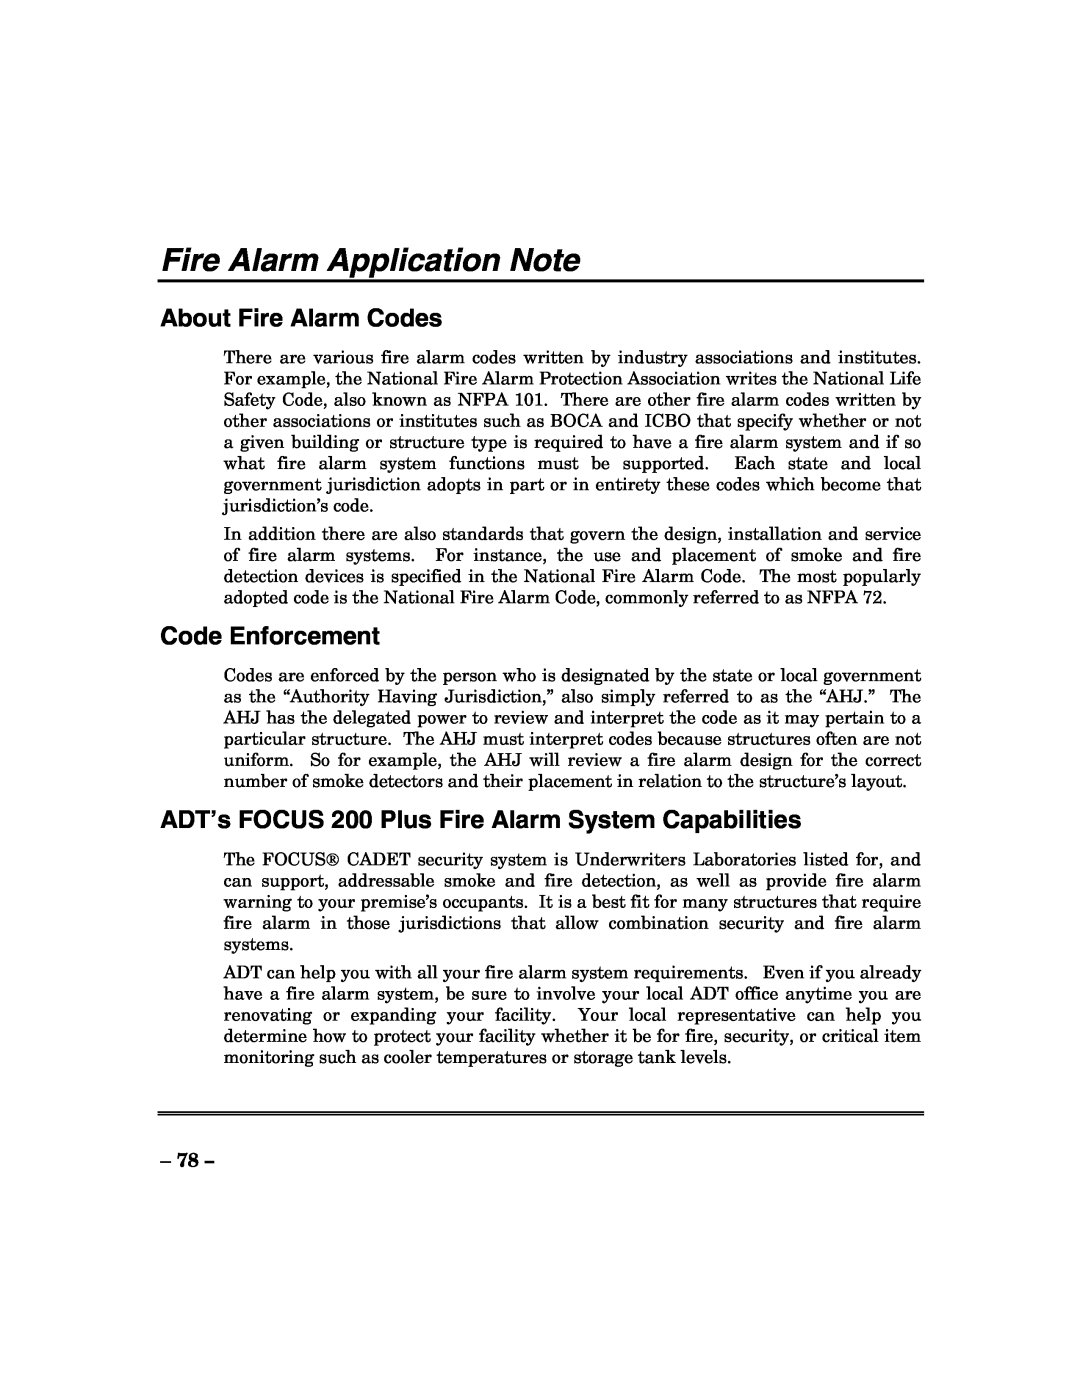 ADT Security Services 200 Plus manual Fire Alarm Application Note, About Fire Alarm Codes, Code Enforcement 